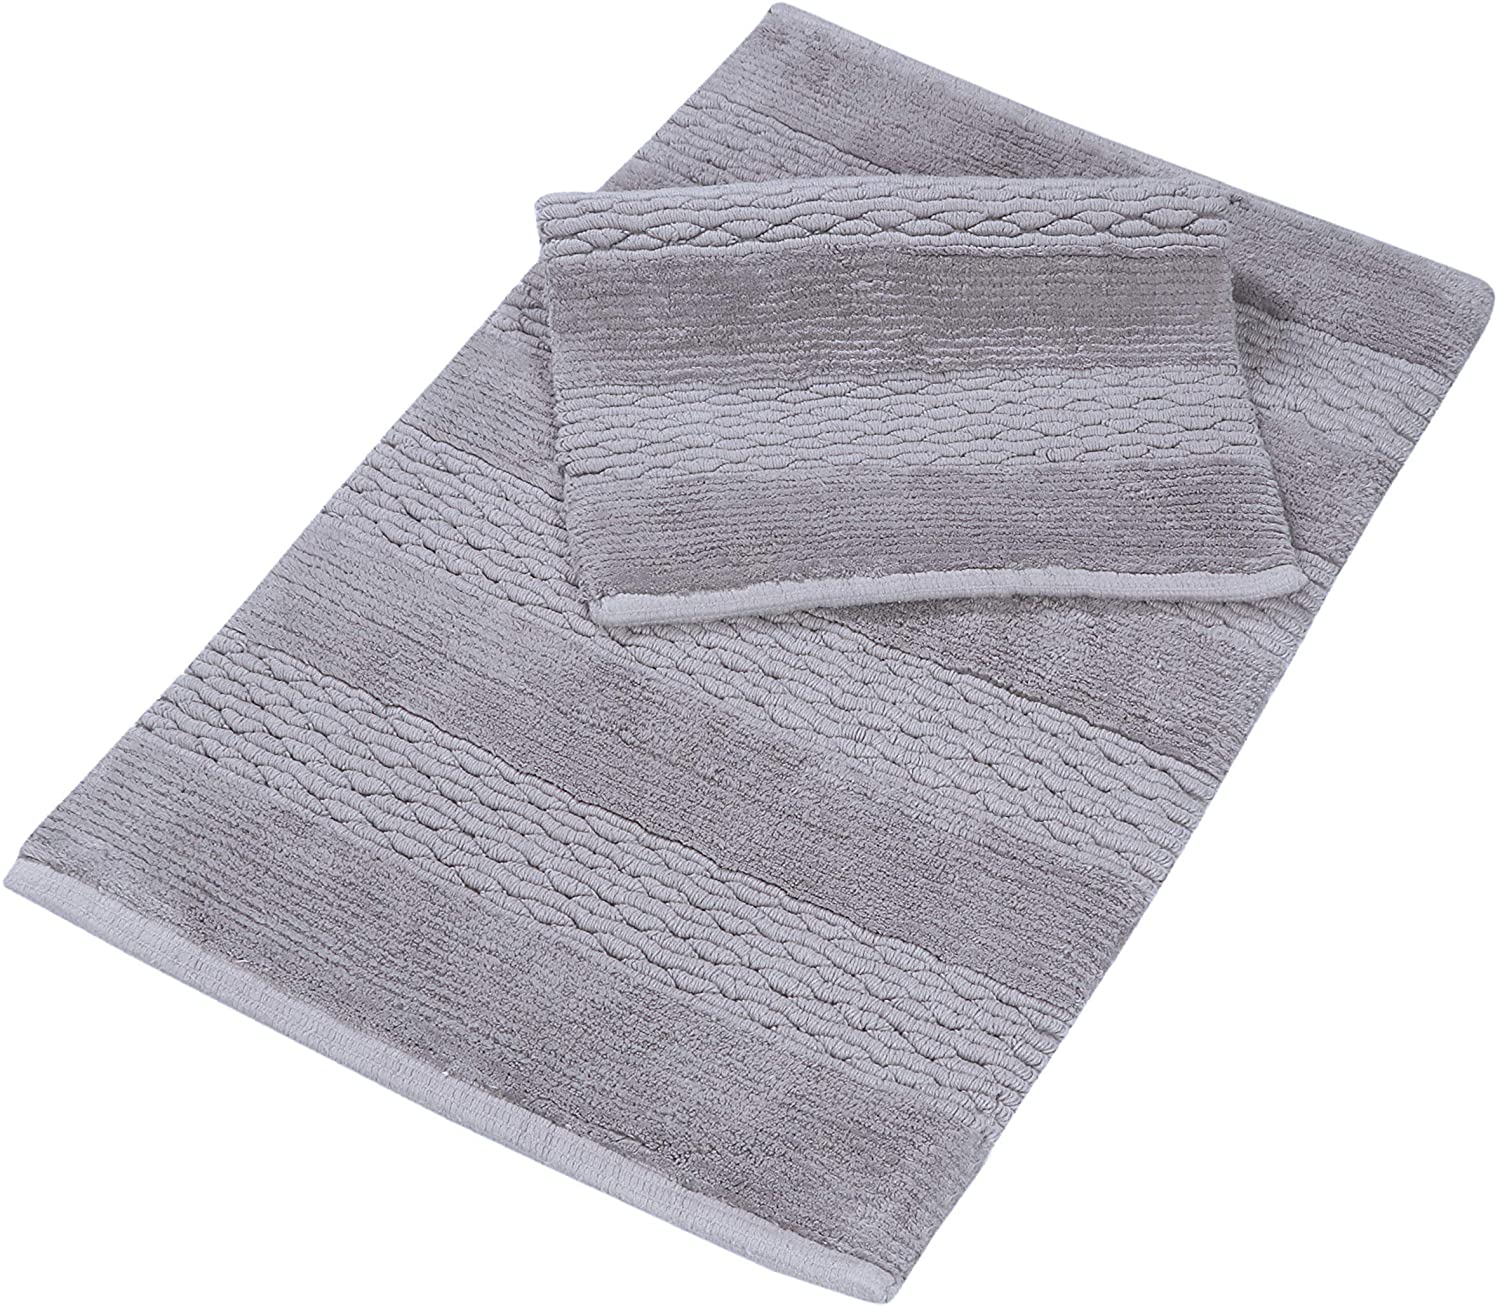 Cotton bath rugs water absorbent stripe design bathmat set of 2 - TreeWool Bathrugs#color_grey